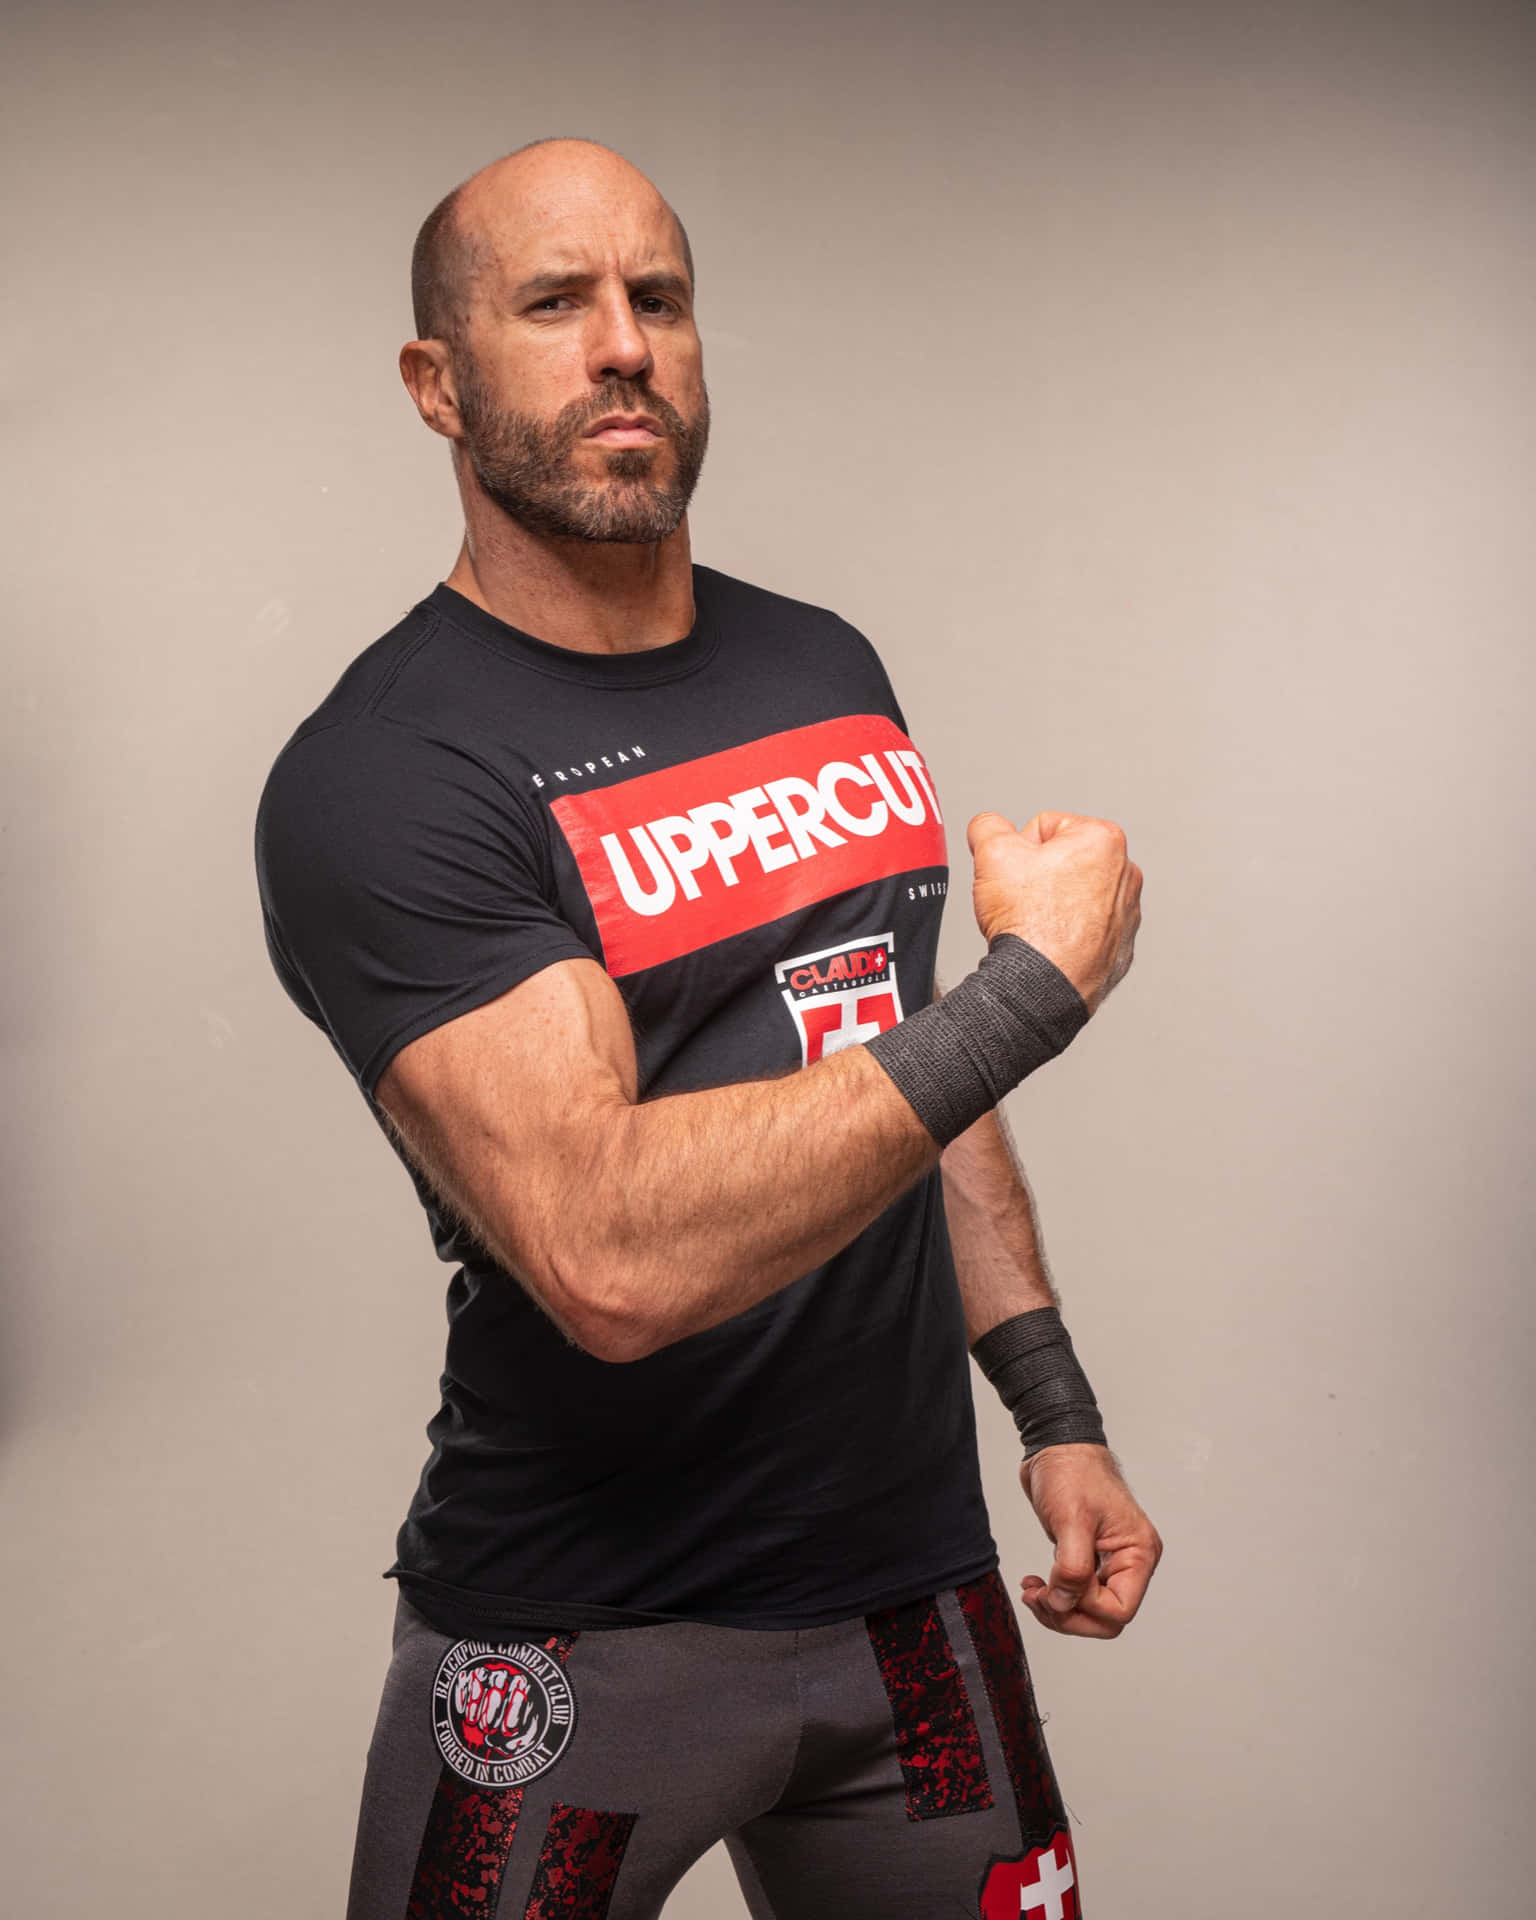 Swiss Professional Wrestler Claudio Castagnoli Black Uppercut Shirt Wallpaper